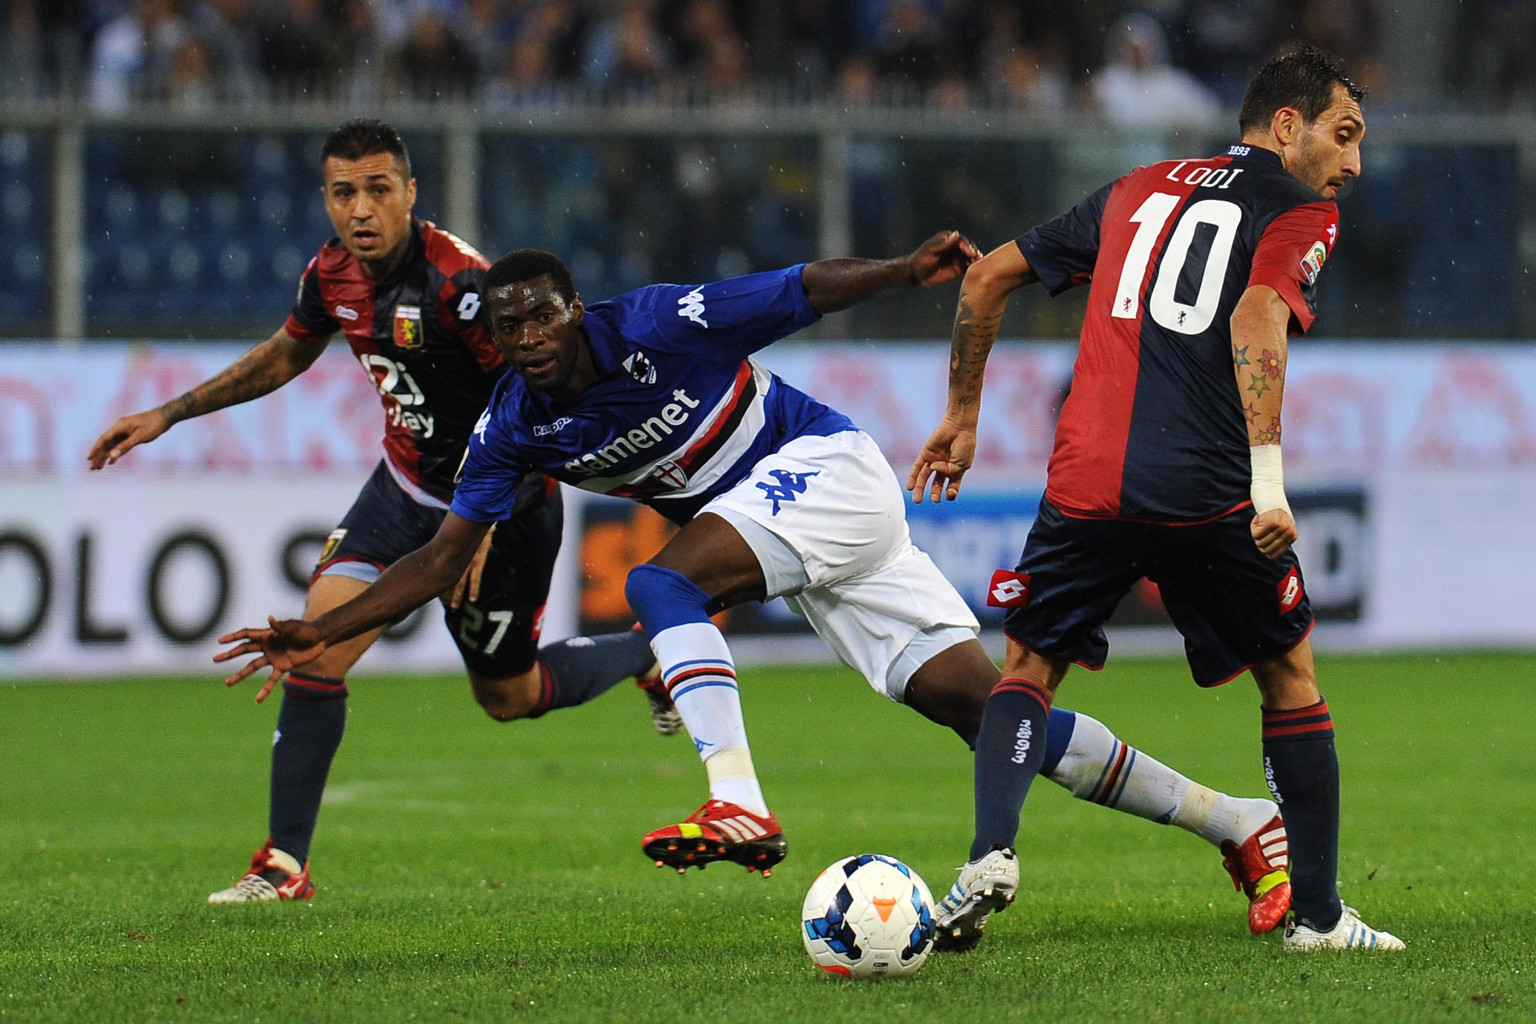 Soi kèo, dự đoán Sampdoria vs Genoa